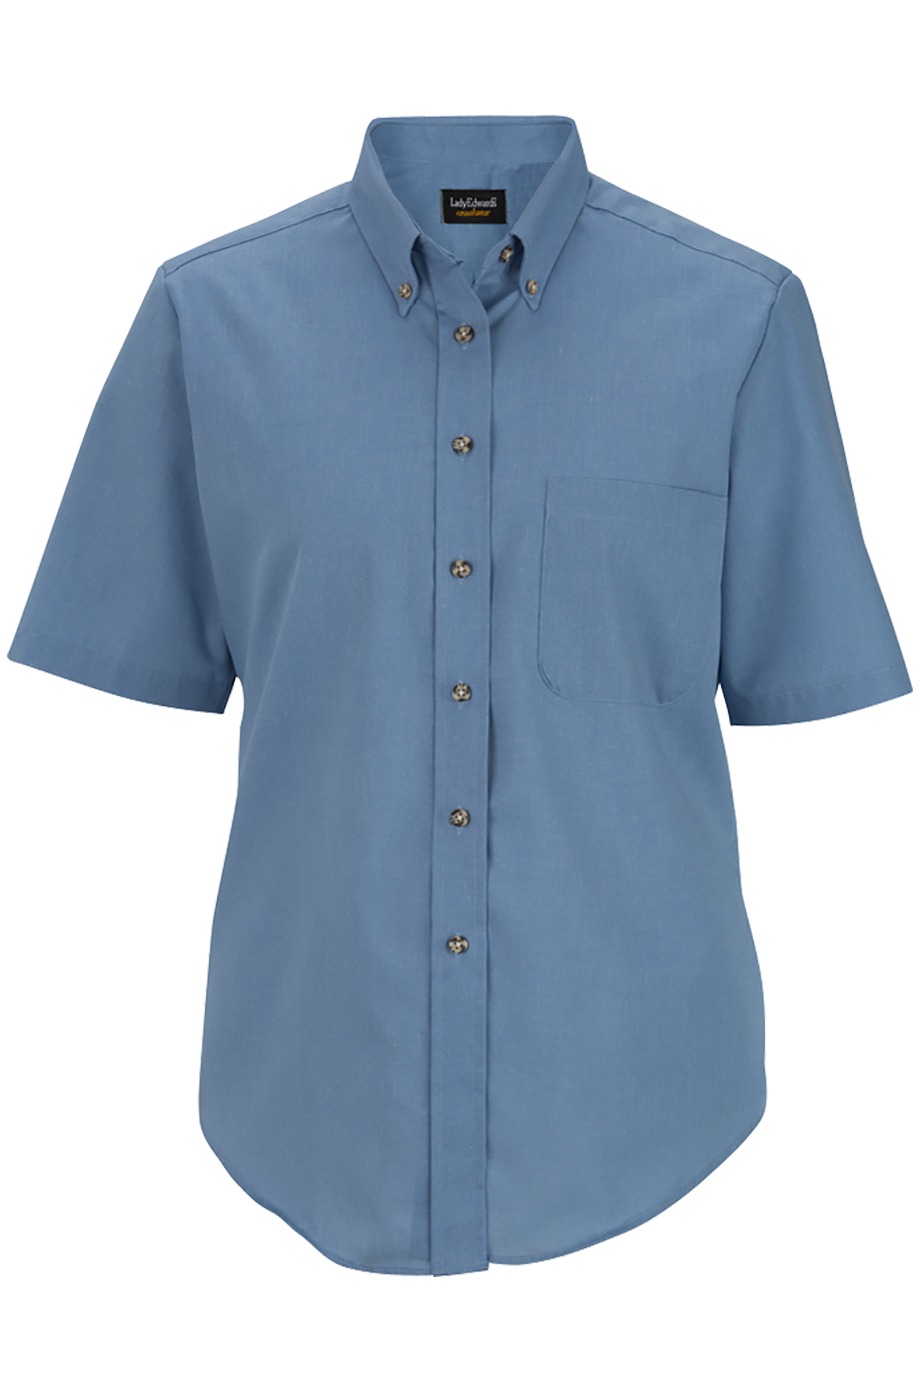 Edwards Garment 5230 - Women's Easy Care Short Sleeve Poplin Shirt $20. ...